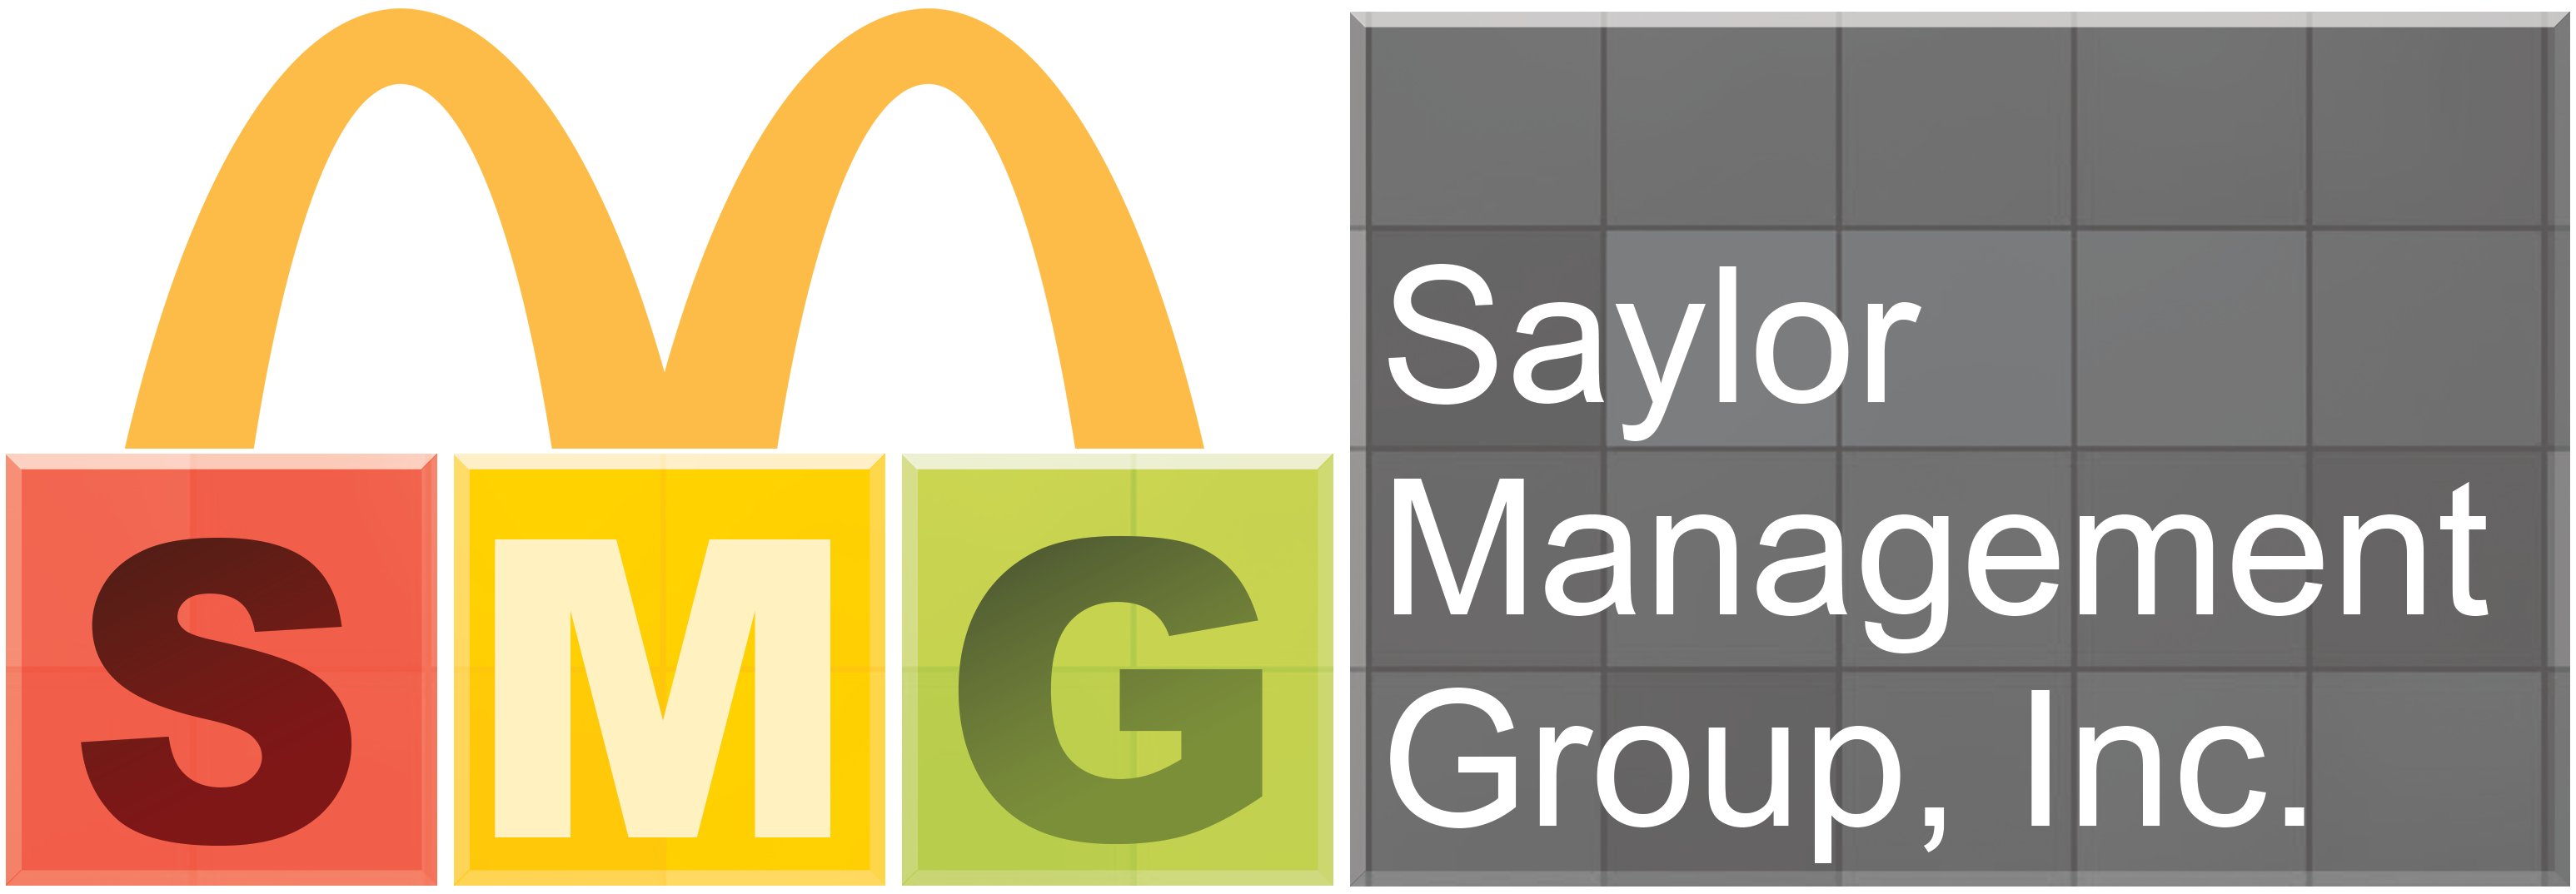 McDonald's Franchisee, Saylor Management Group